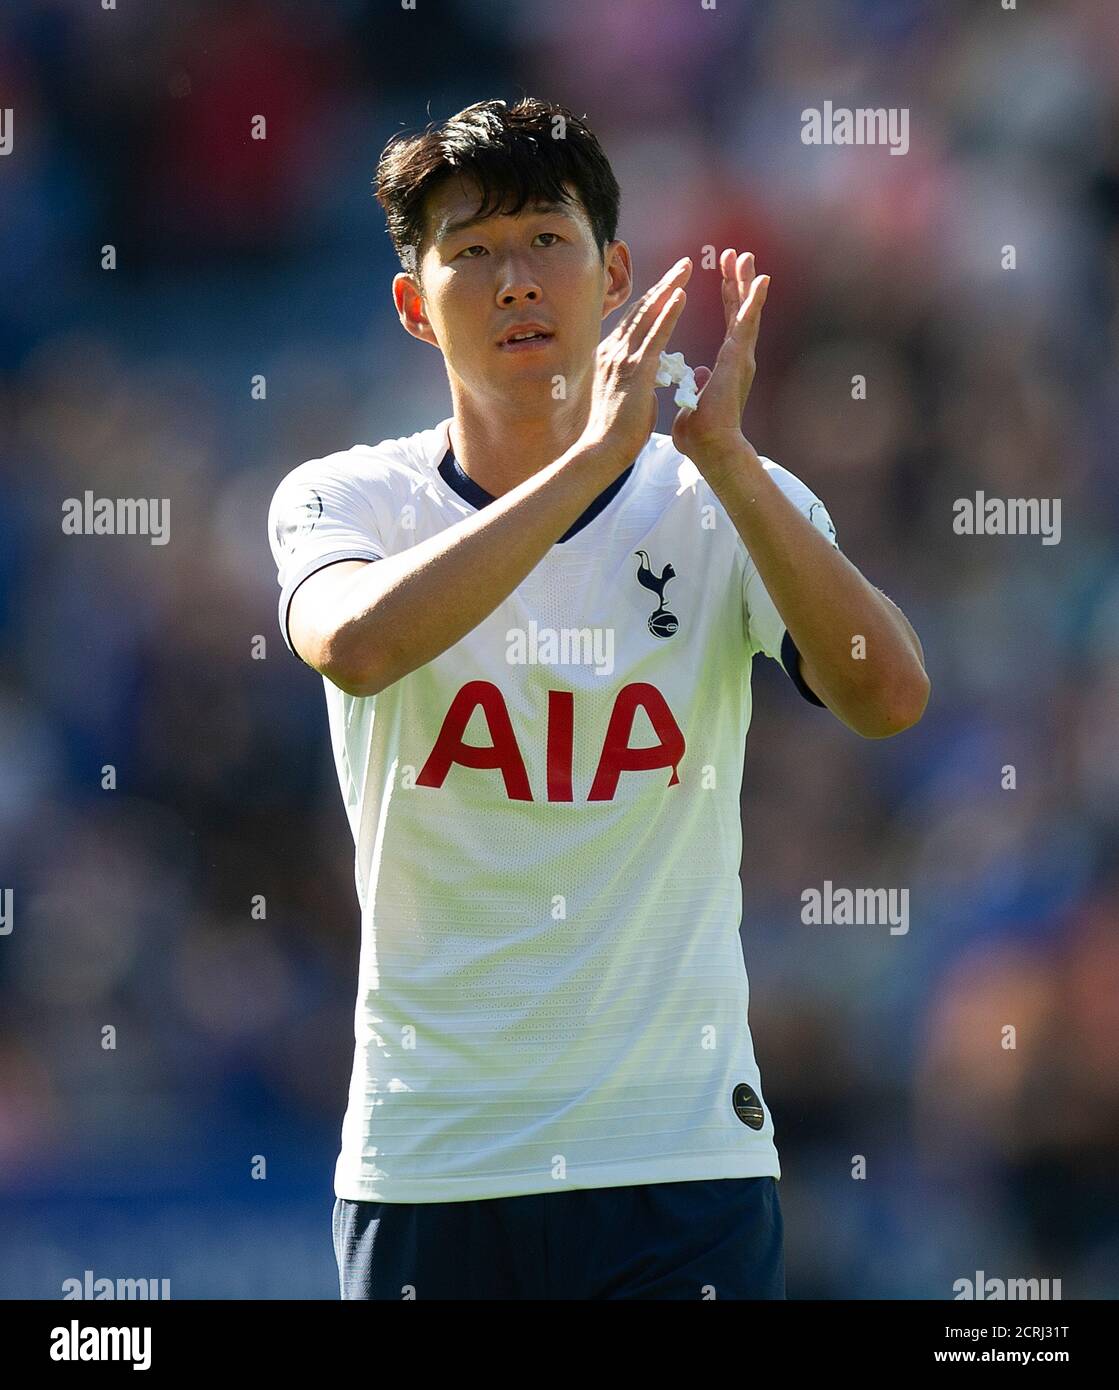 Tottenham Hotspurs' Son Heung-min  PHOTO CREDIT : © MARK PAIN / ALAMY STOCK PHOTO Stock Photo